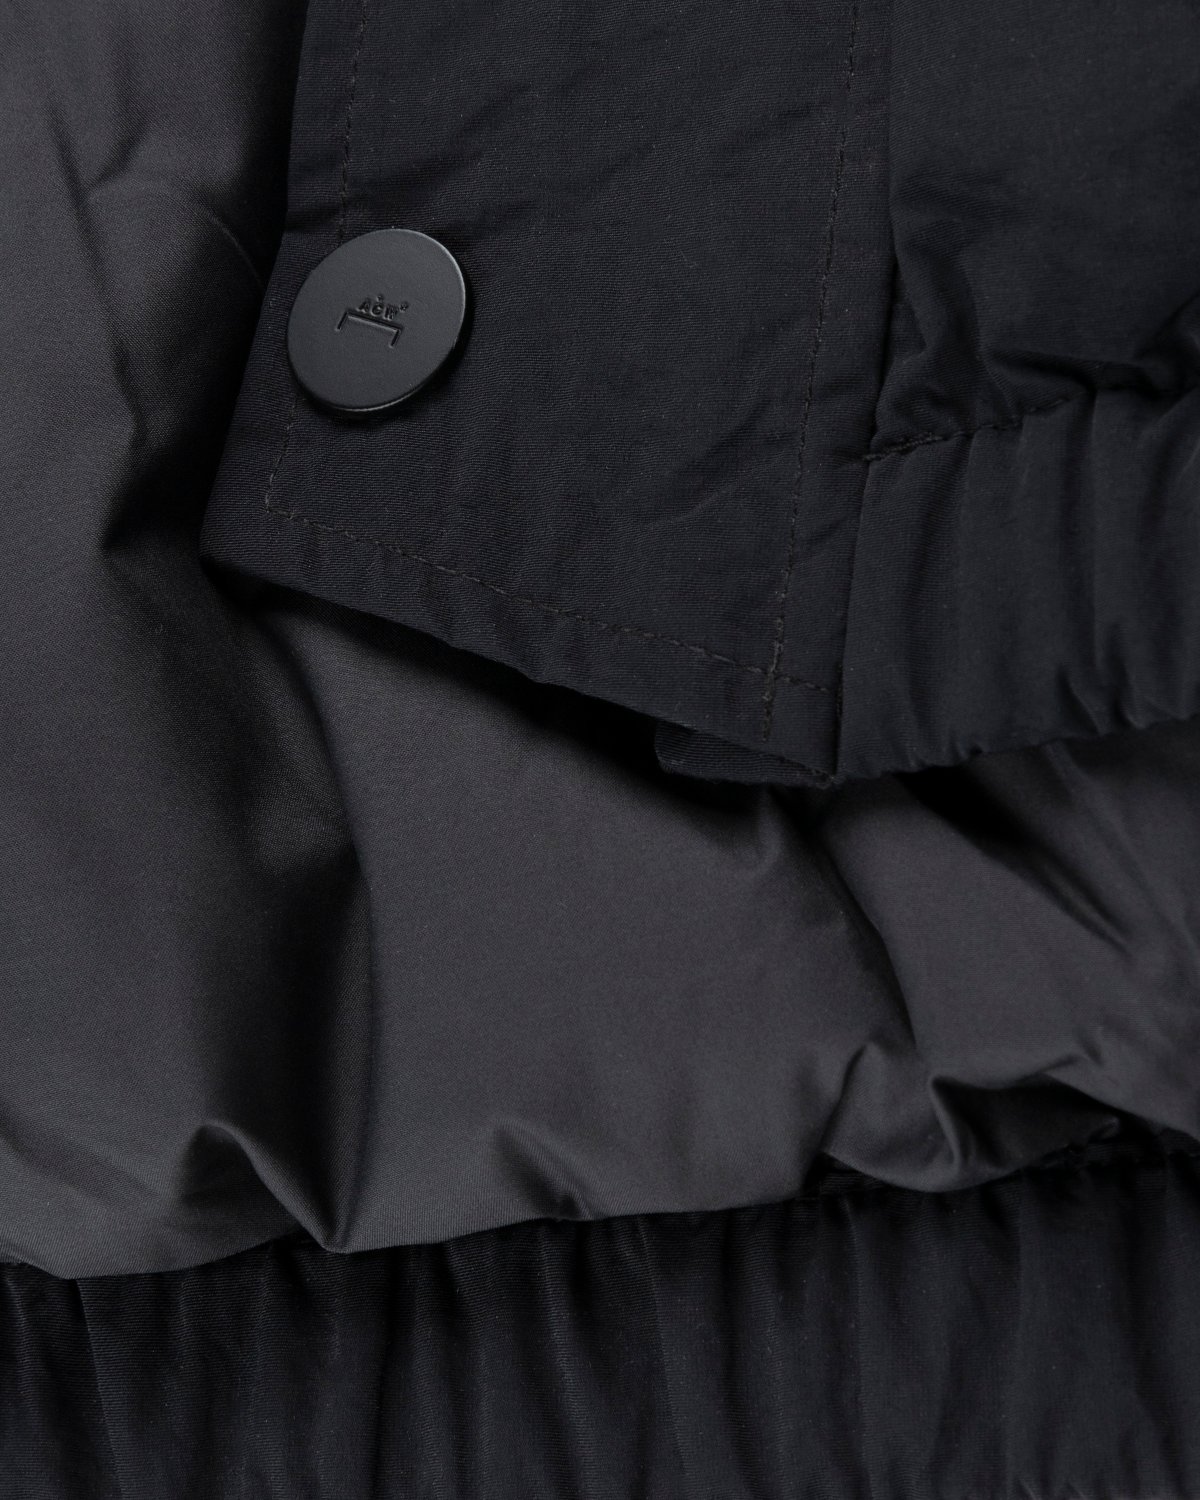 A-Cold-Wall* - Cirrus Jacket Black - Clothing - Black - Image 6